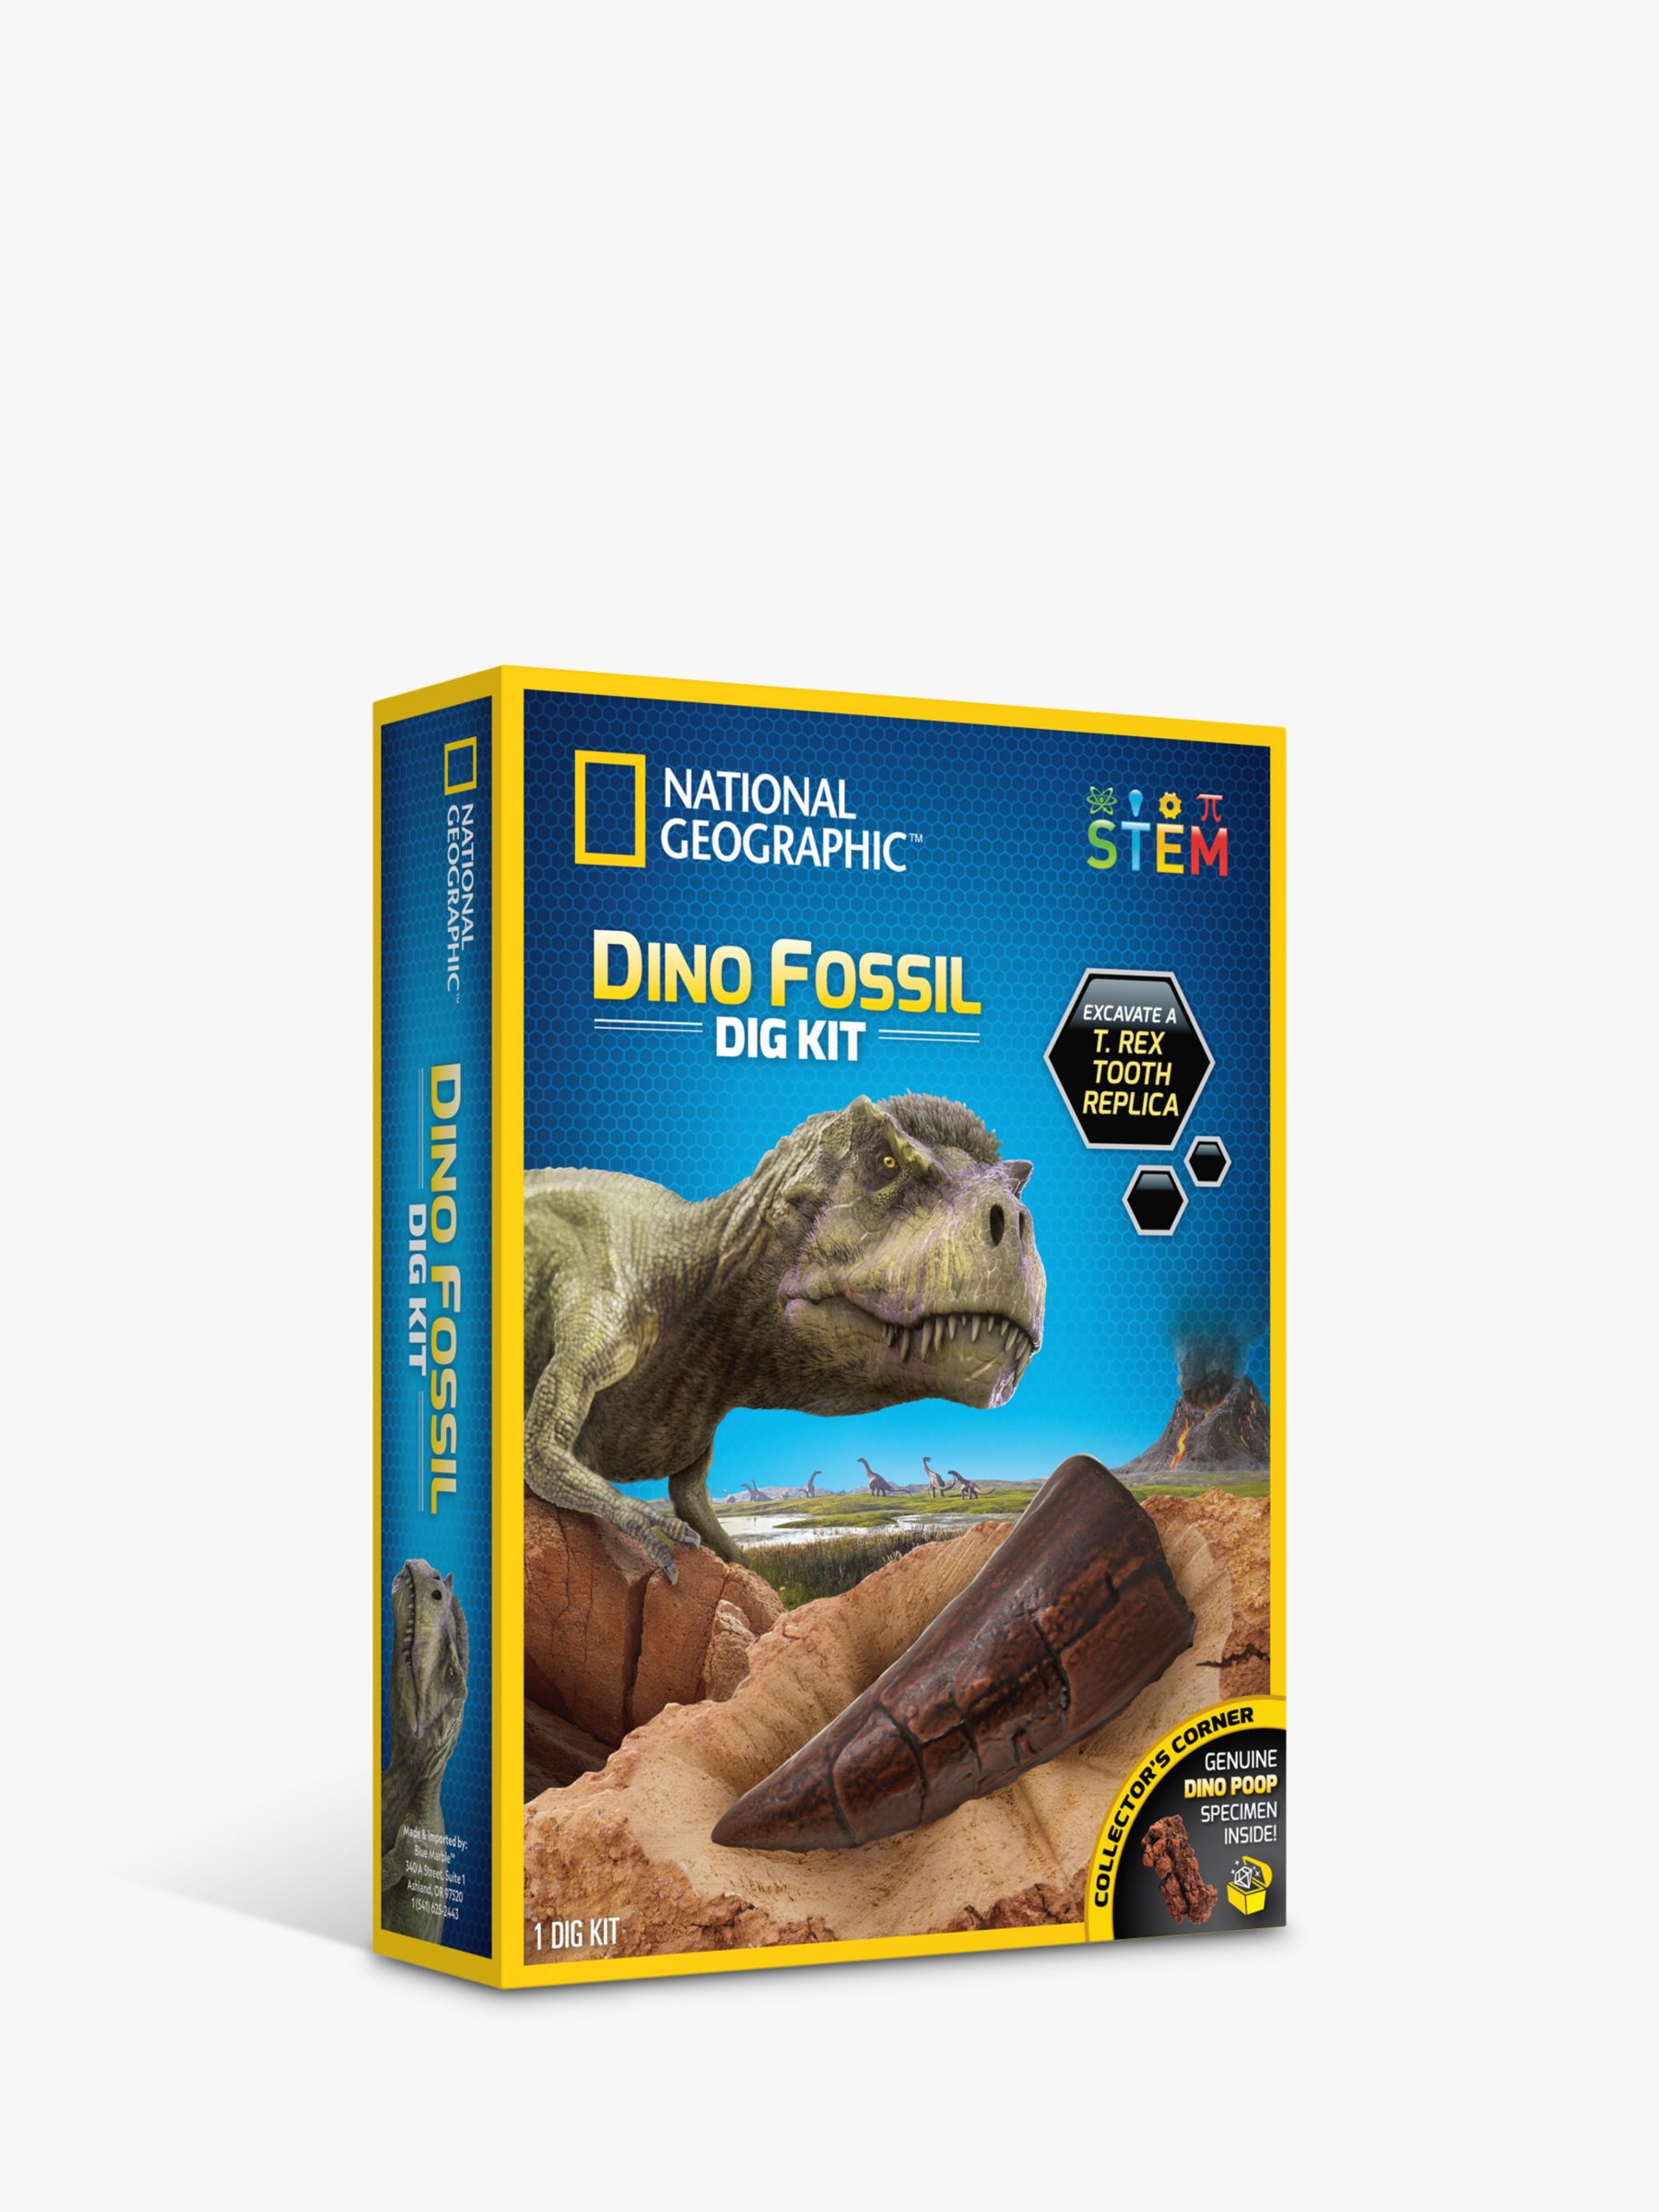 National Geographic Dino Fossil Dig Kit Oculto T Rex diente réplica excavar UK 